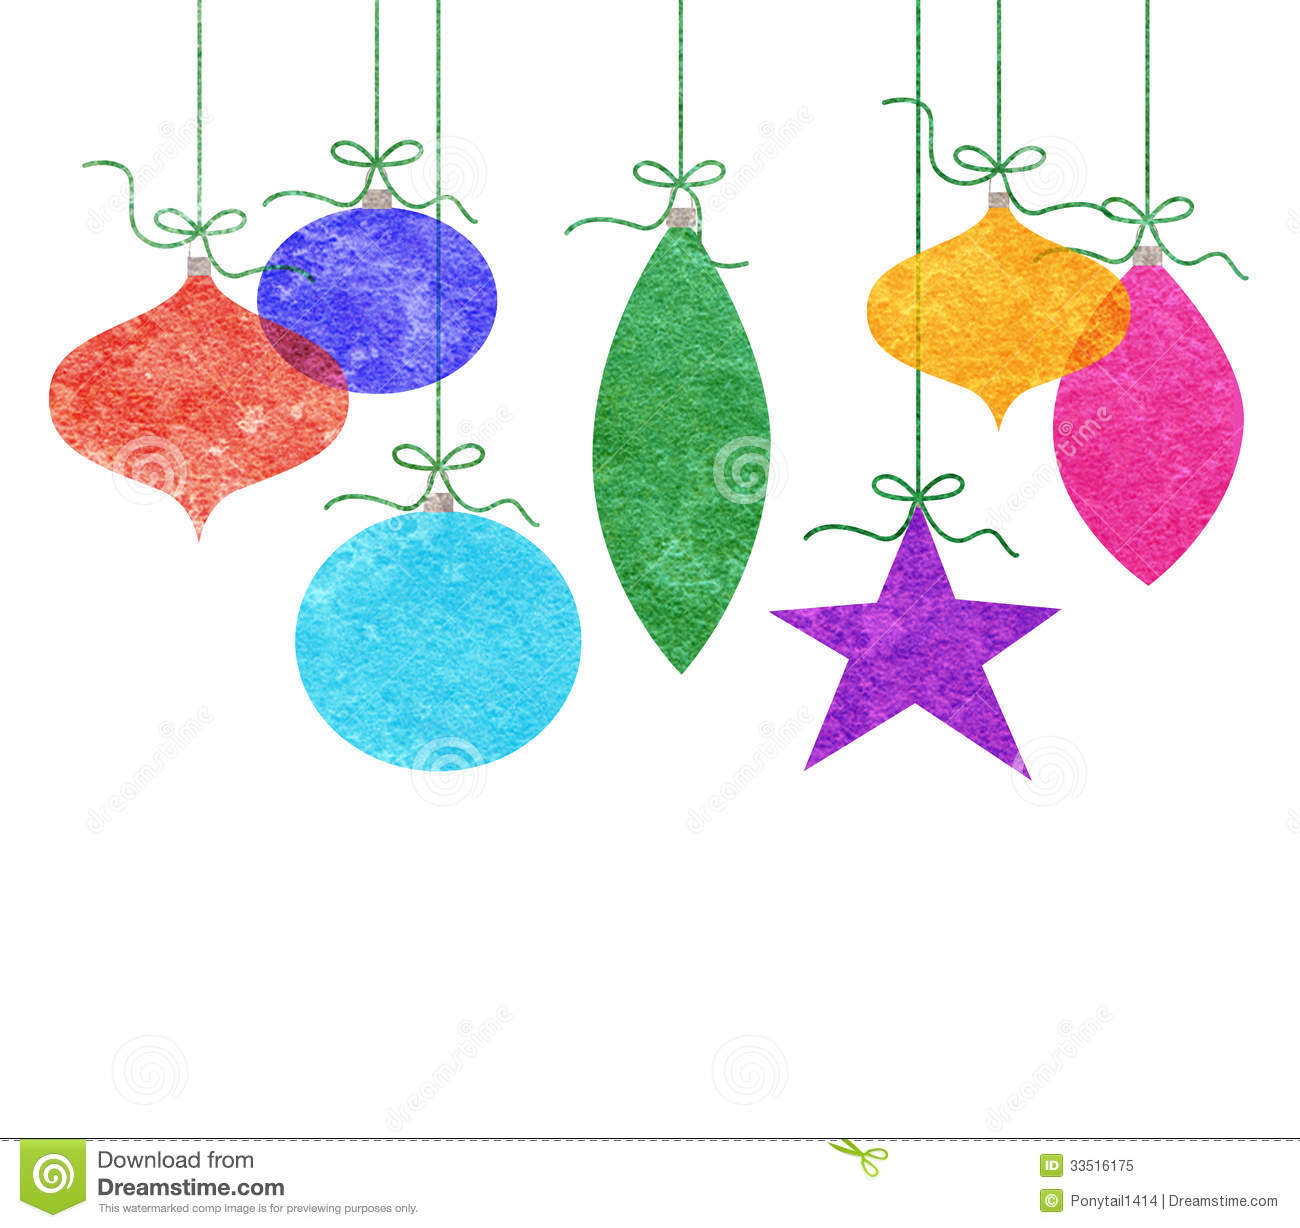 Whimsical Hanging Christmas Ornaments Royalty Free Stock Photo   Image    